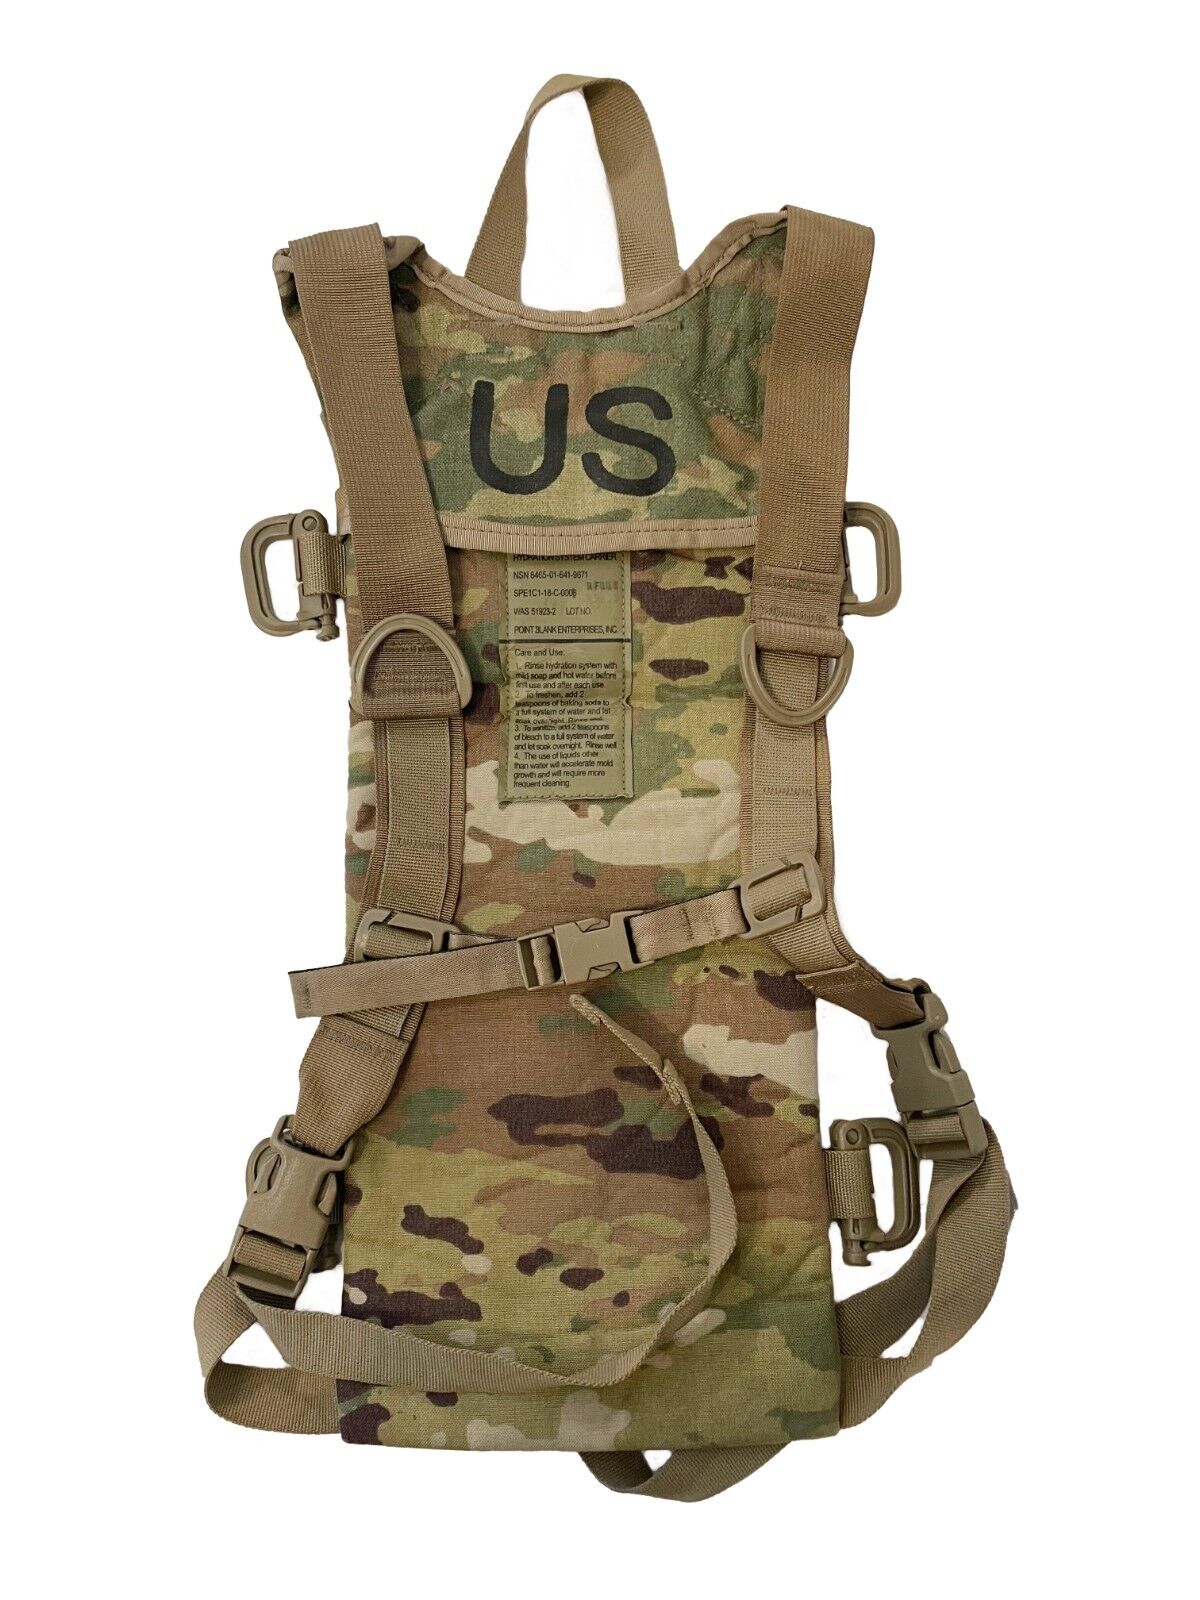 U.S. Army OCP/Scorpion Camouflage Hydration System Carrier NSN: 8465-01-641-9671